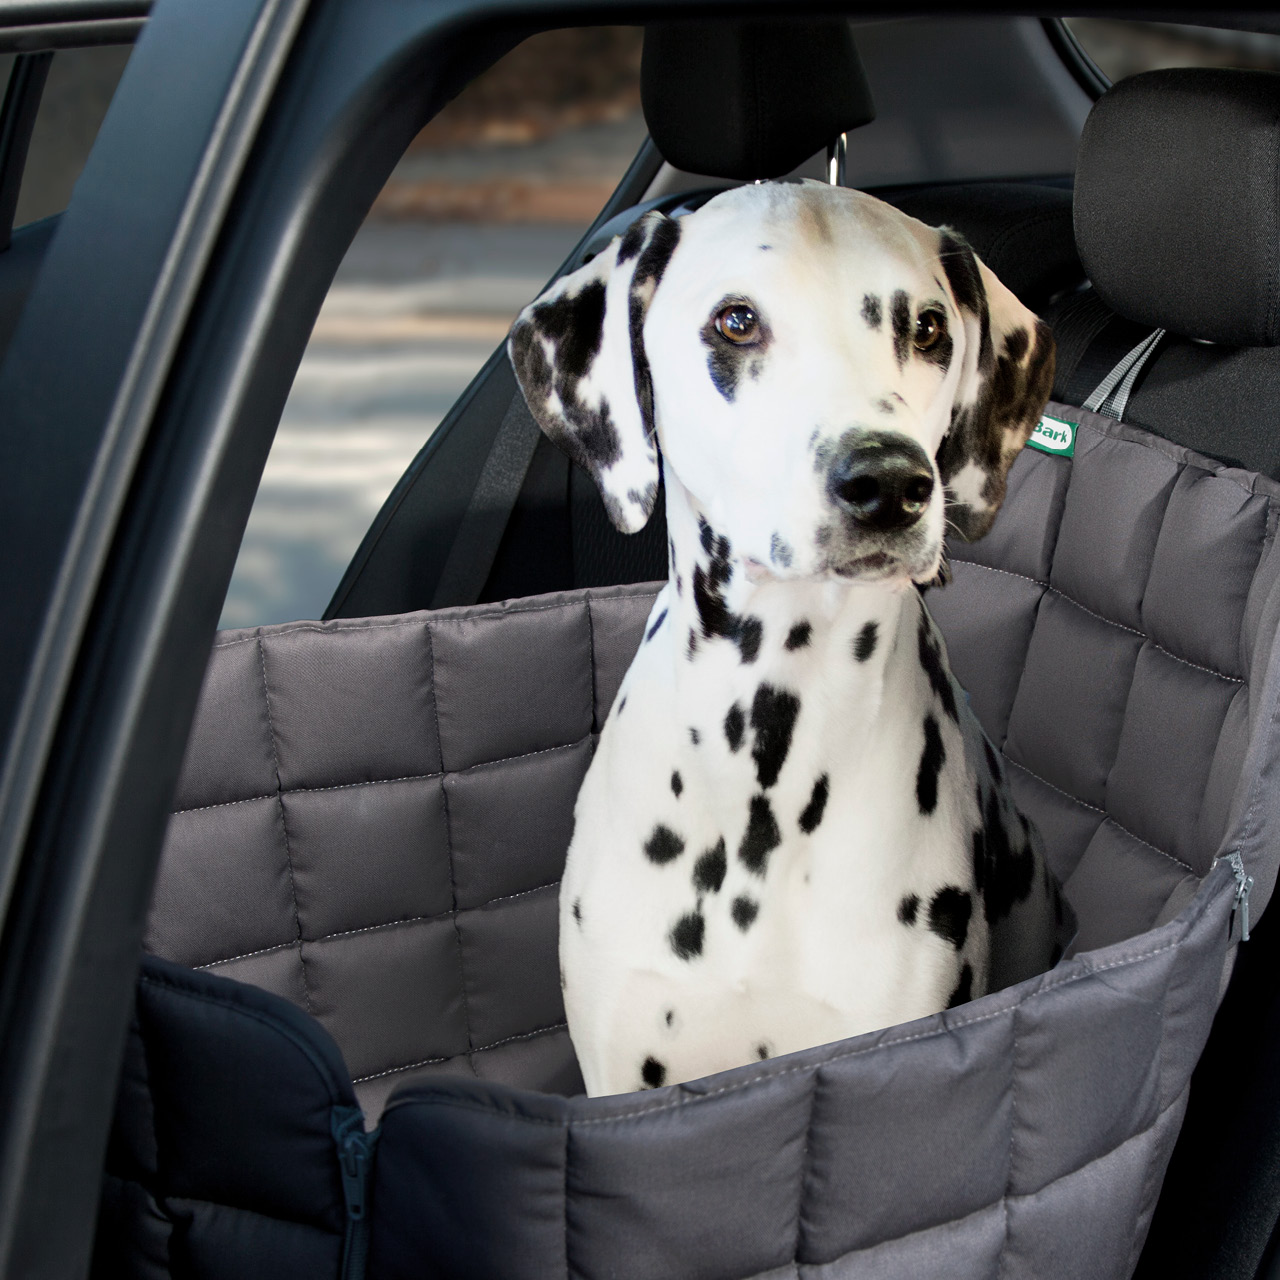 Doctor Bark - Autoschondecke für Hunde - Rückbank 1-Sitz Gr. M - grau